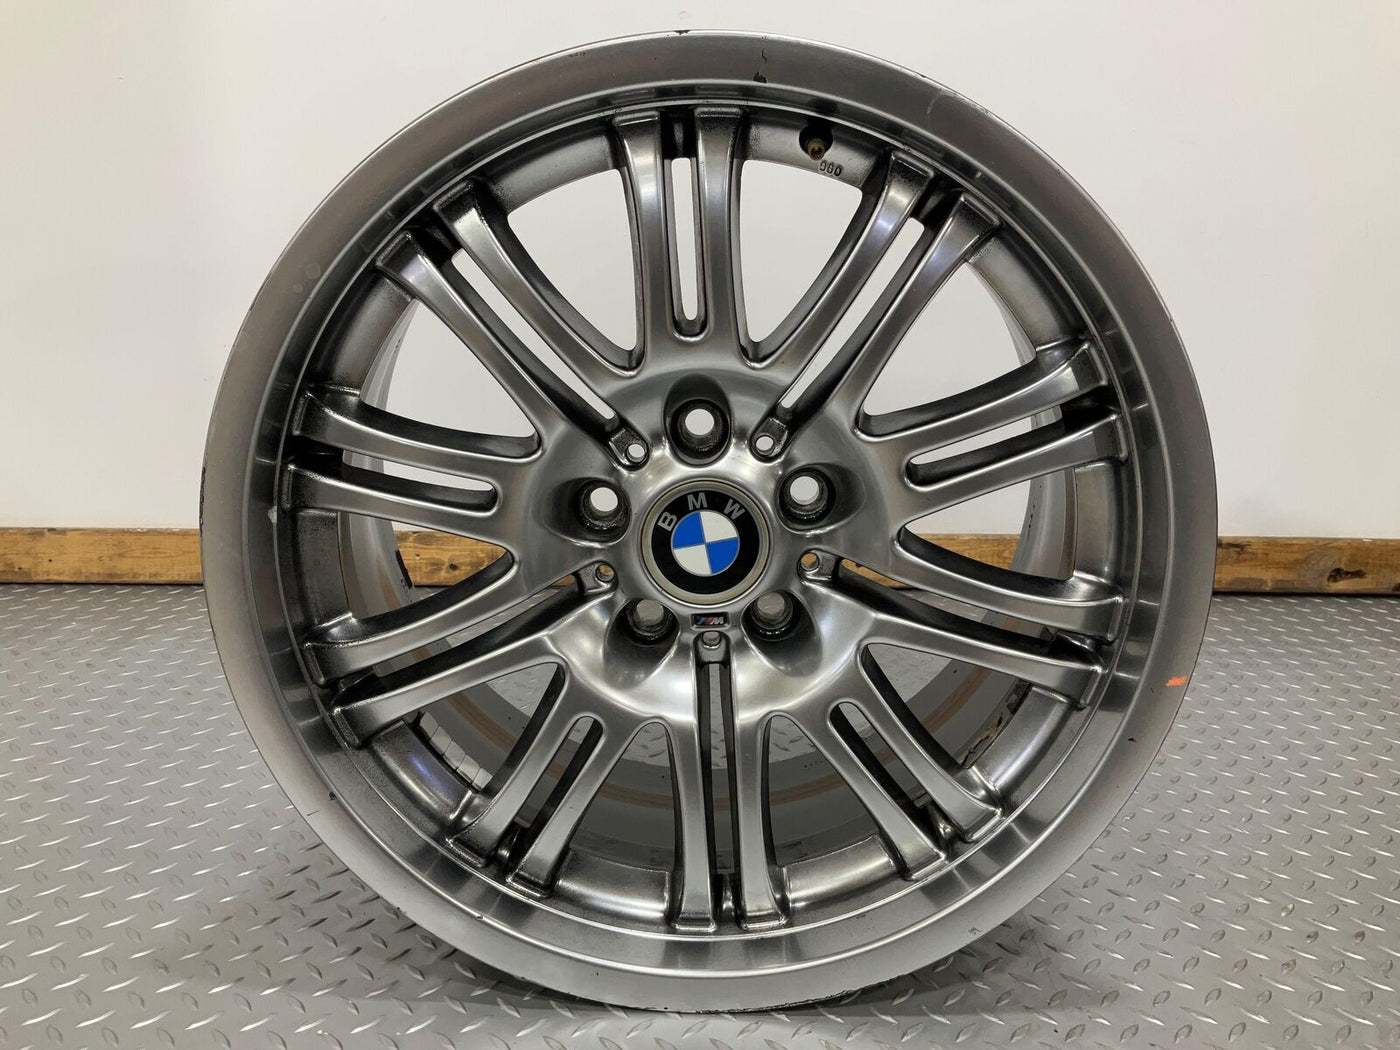 01-06 BMW M3 Set of Staggered 18x8 ET47 & 18x9 ET26 Rear Wheels See Details